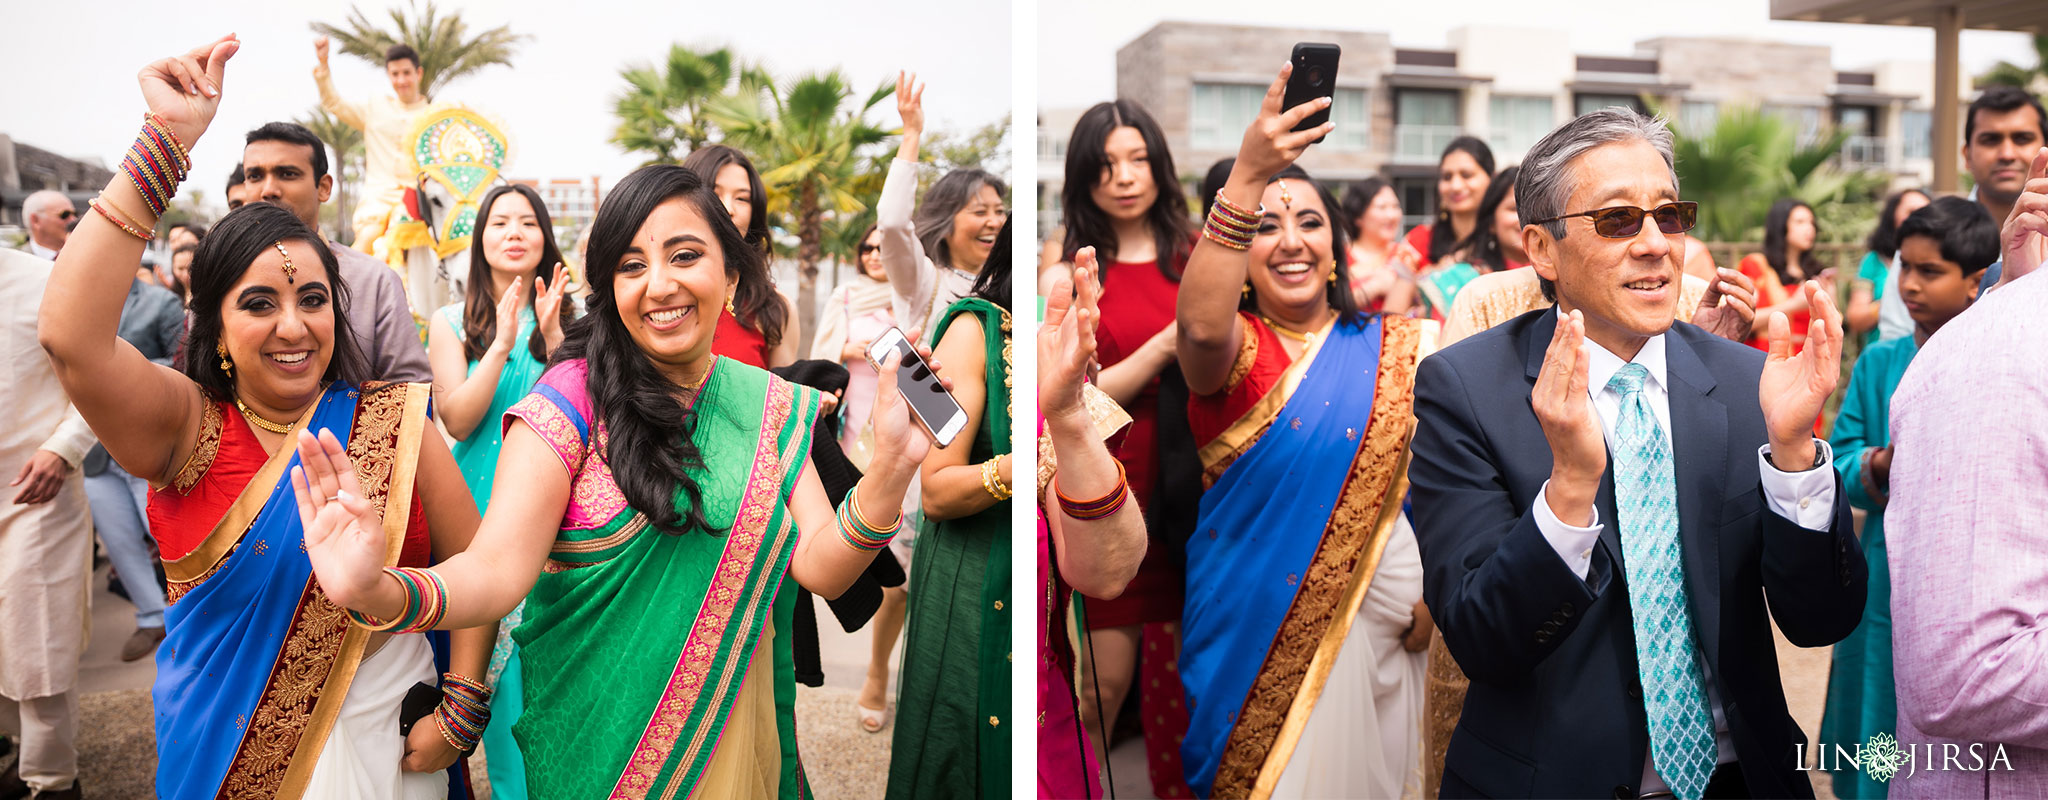 17 pasea hotel and spa huntington beach indian wedding baraat photography